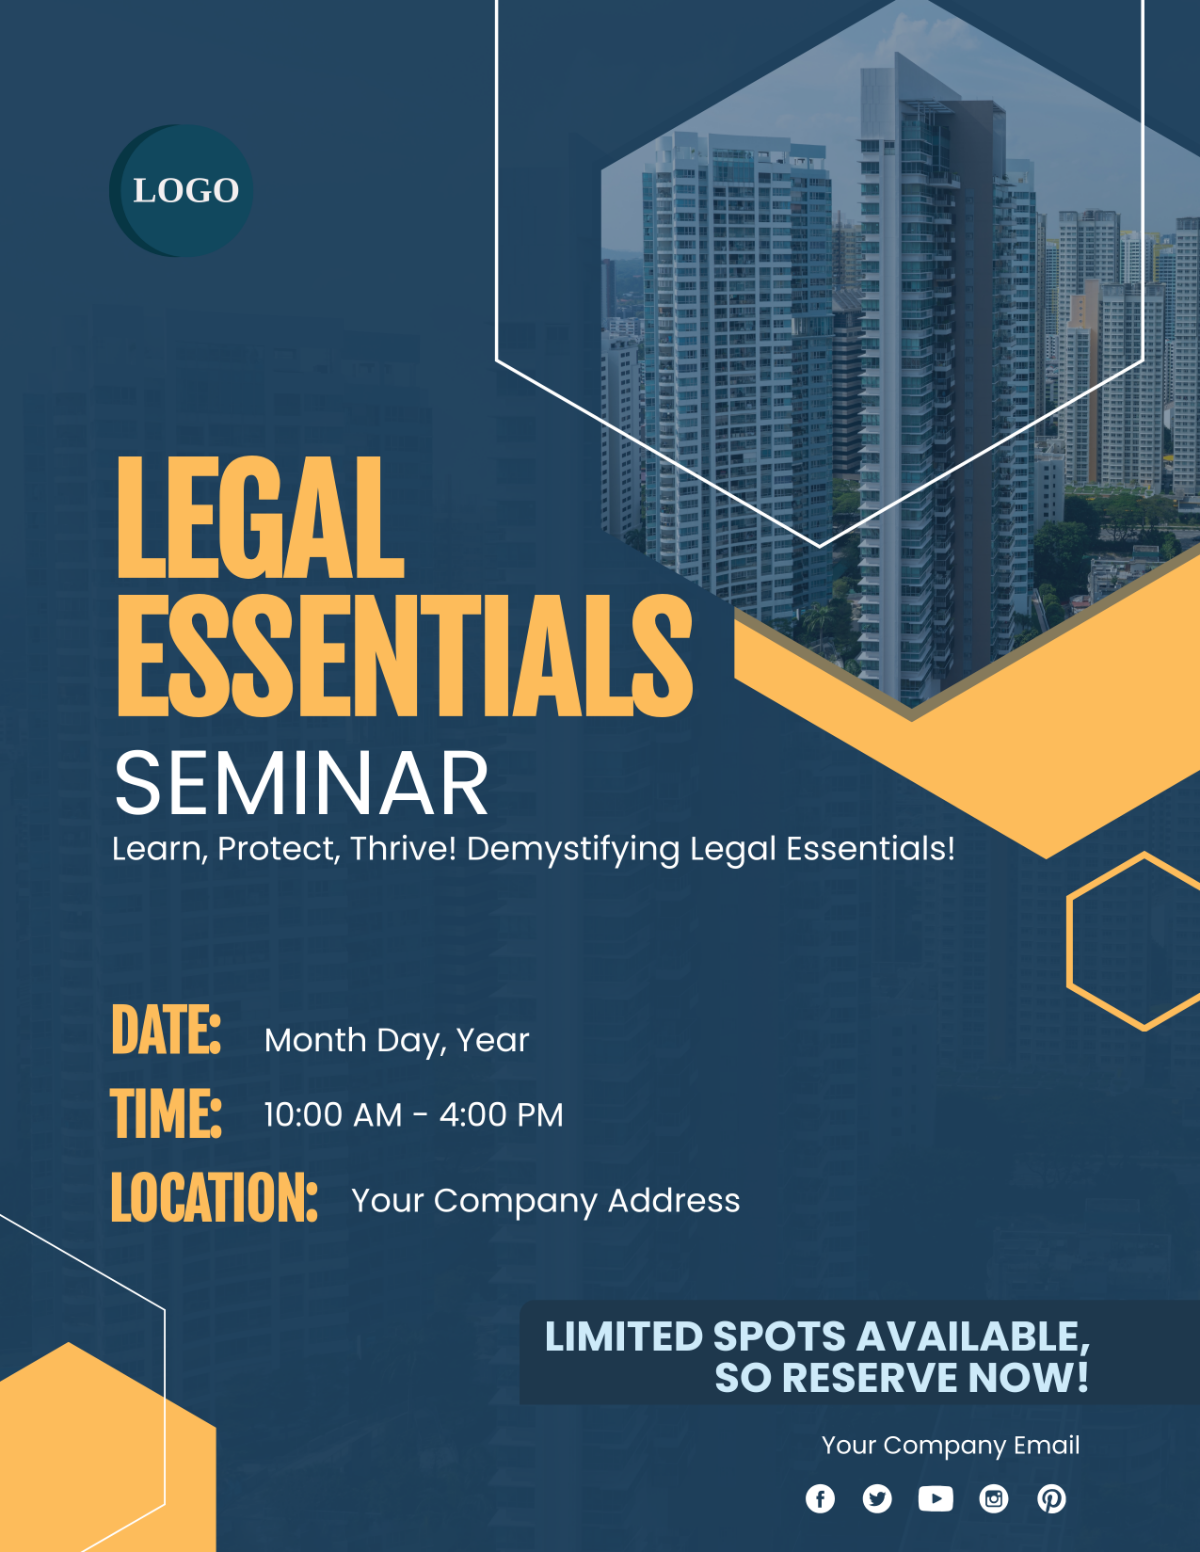 Legal Essentials Seminar Flyer Template